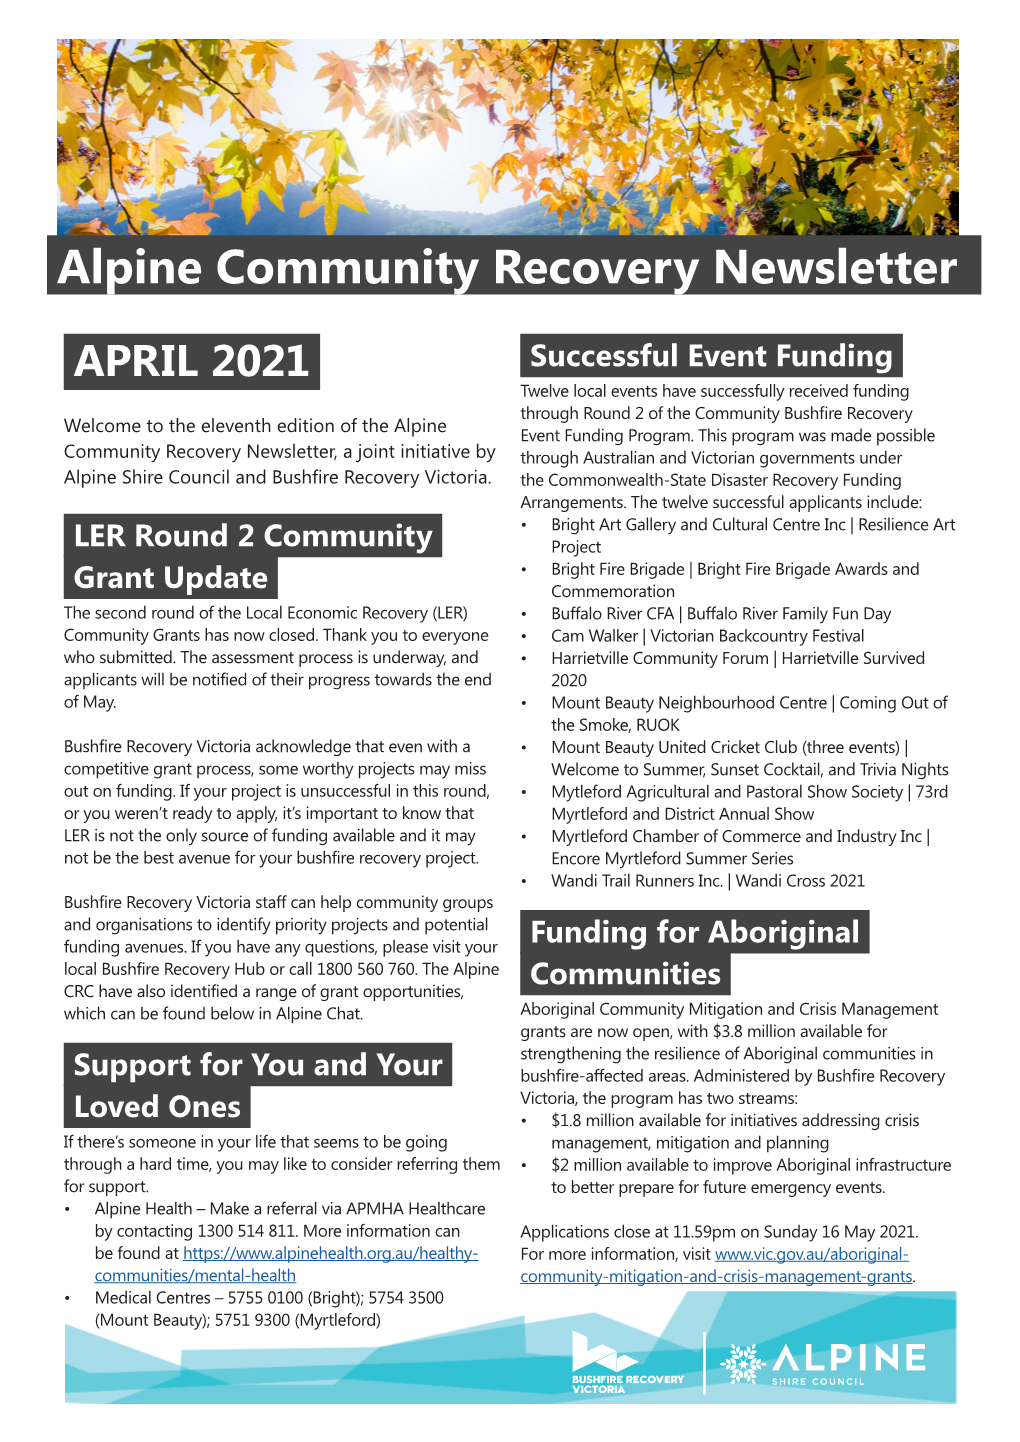 Alpine Community Recovery Newsletter April 2021